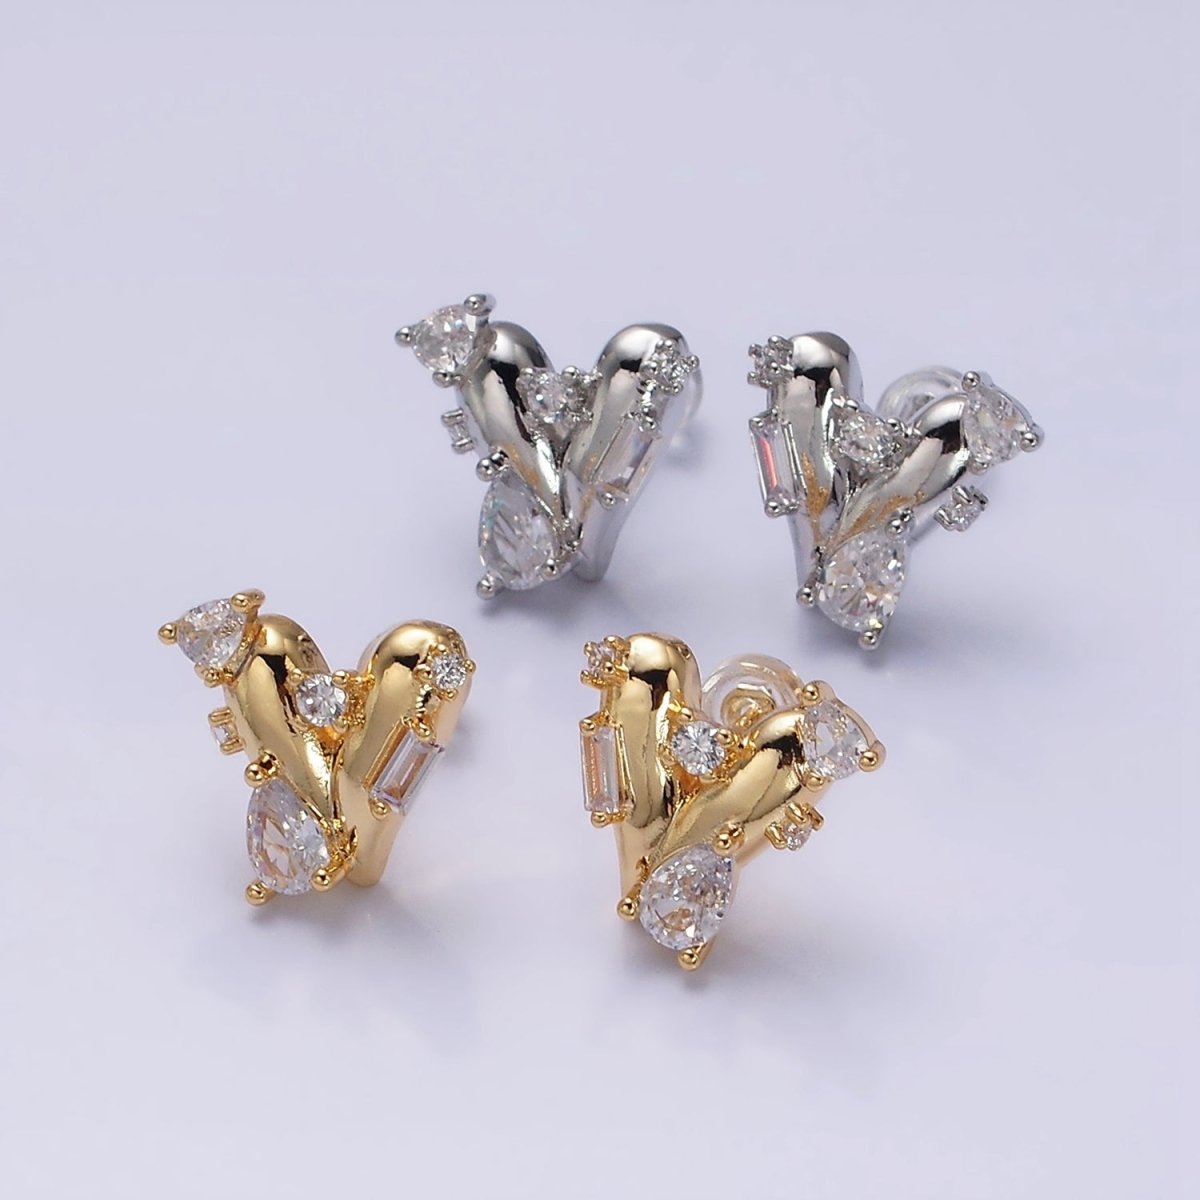 16K Gold Filled Chubby Heart Clear Baguette Teardrop CZ Stud Earrings in Gold & Silver | AD1060 AD1061 - DLUXCA